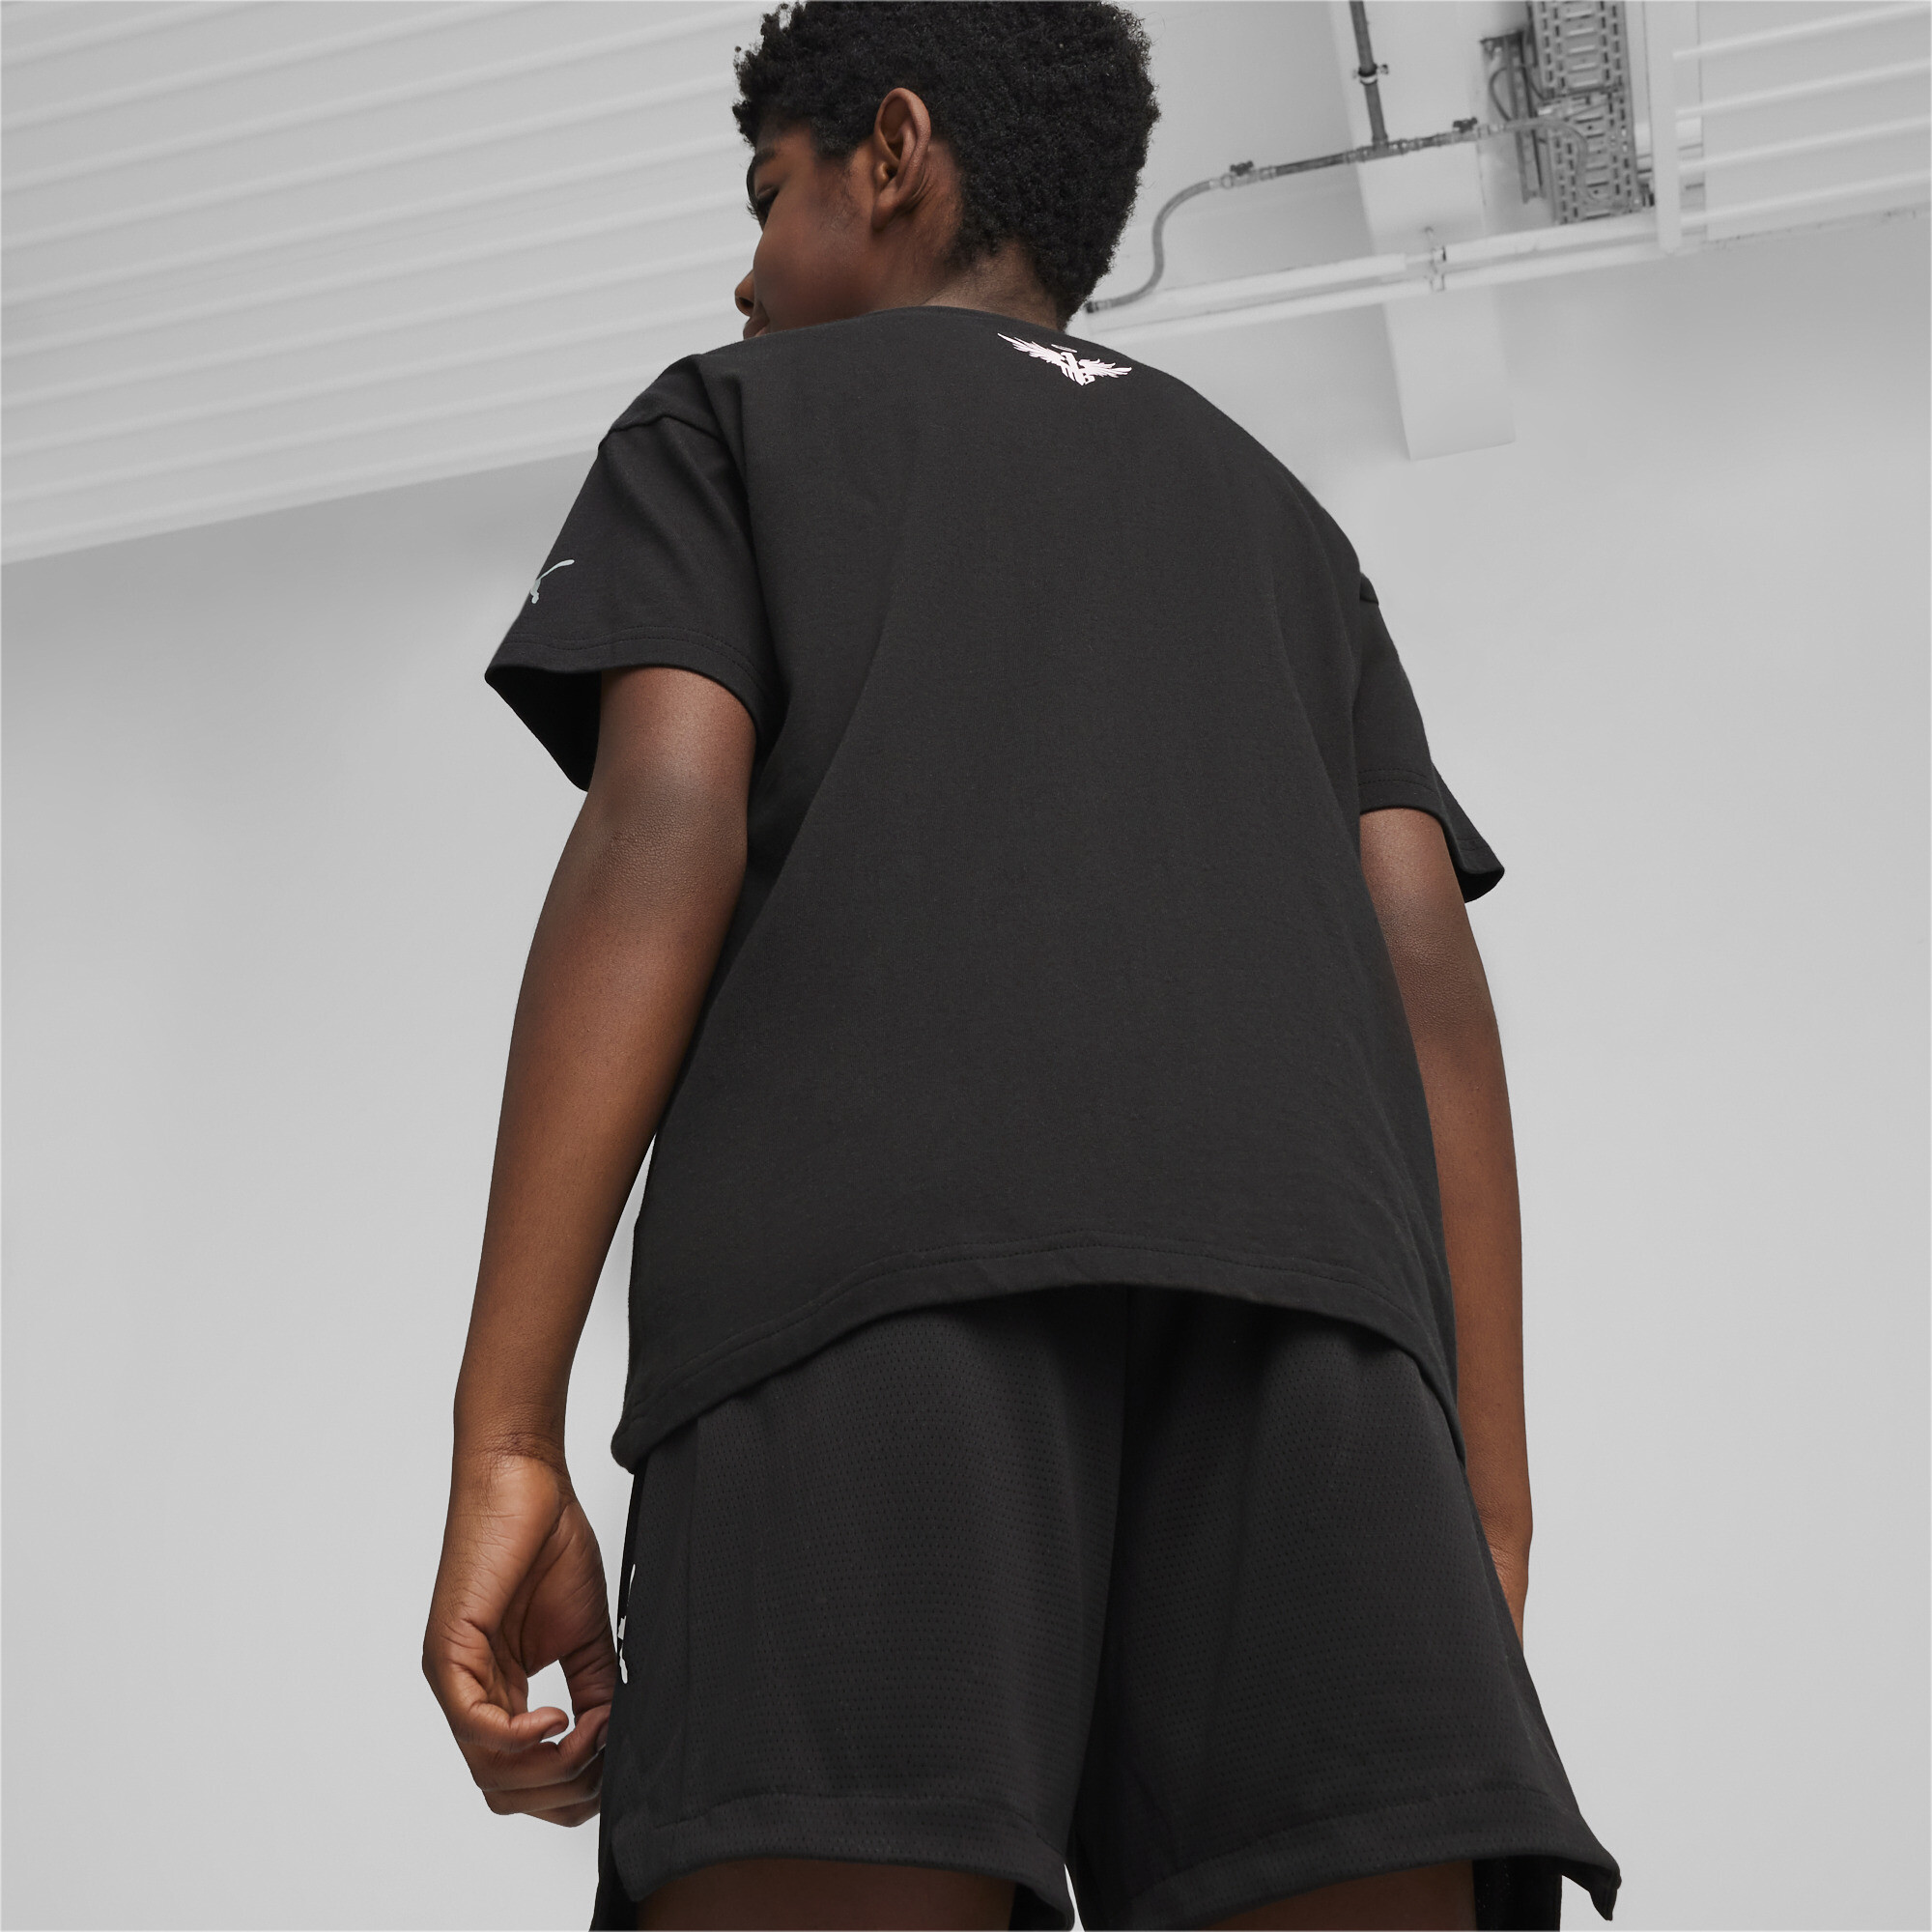 Puma MELO IRIDESCENT Boys' T-Shirt, Black, Size 9-10Y, Age